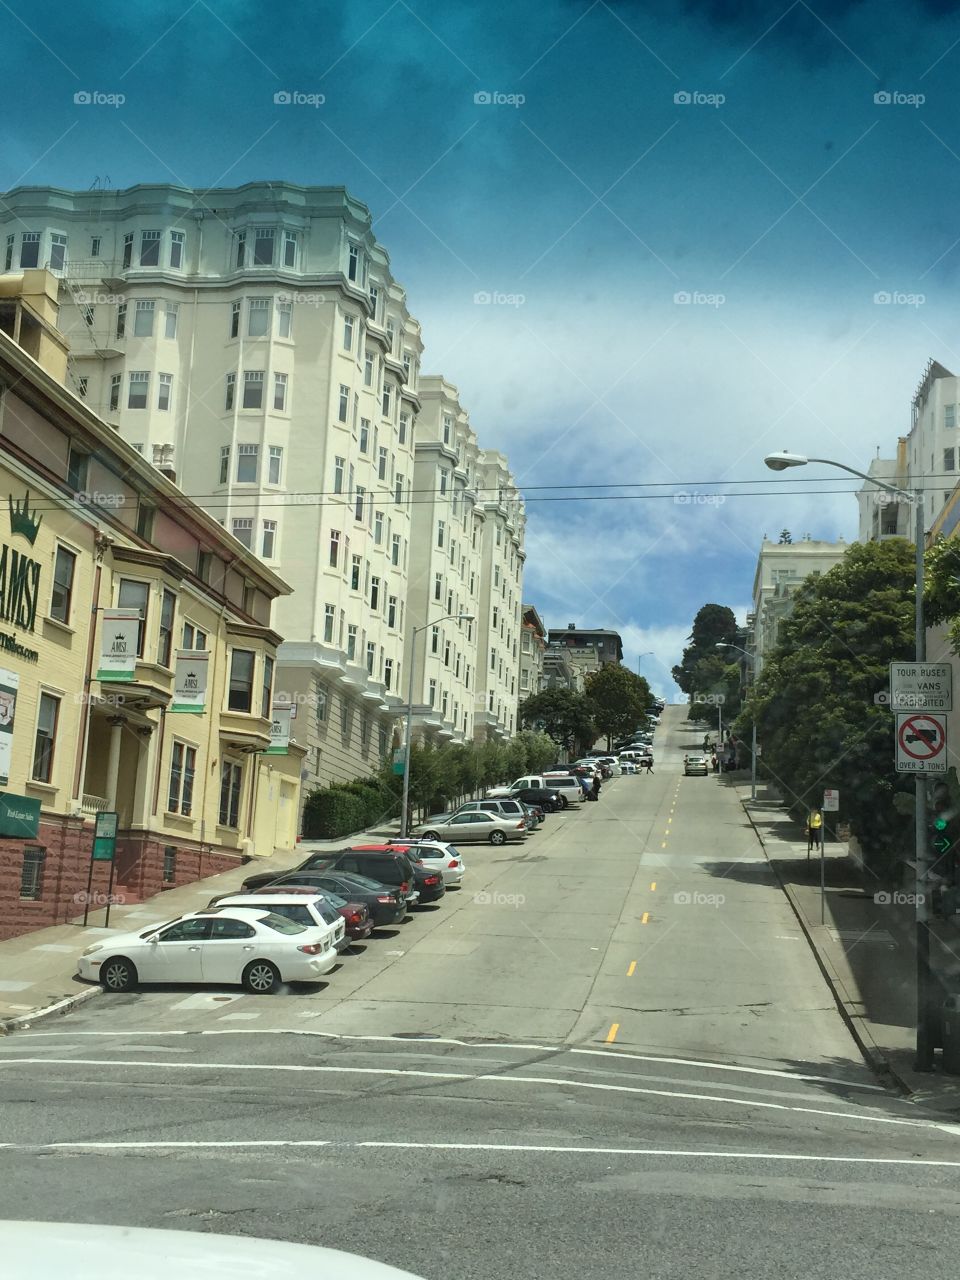 San Francisco streets